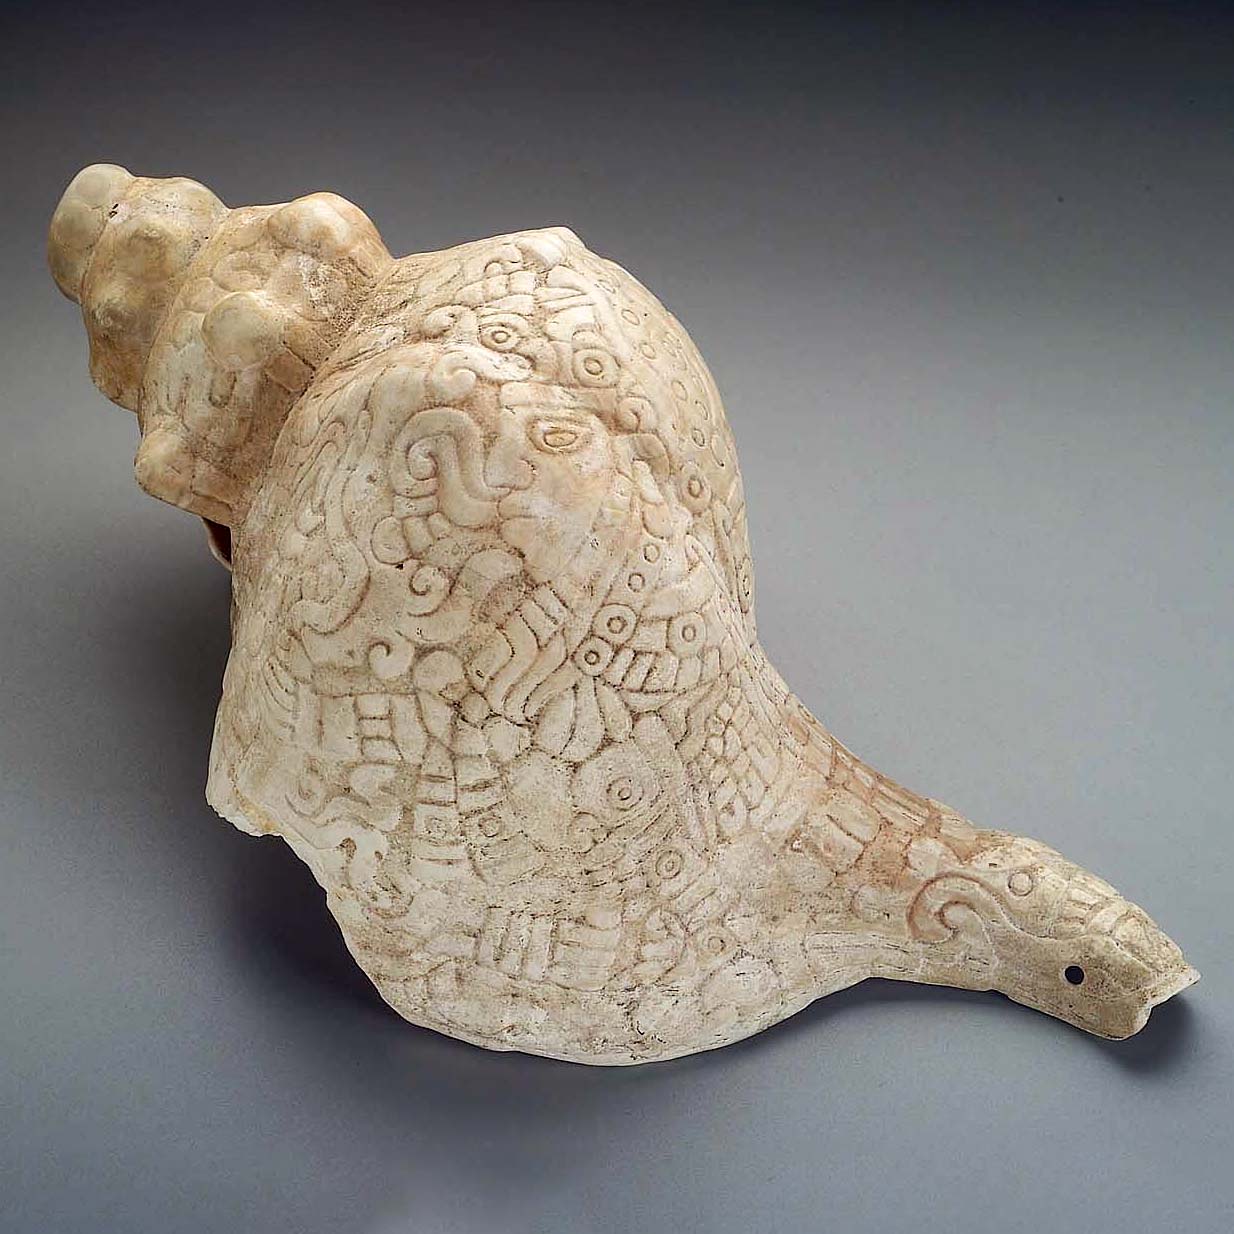 Труба из раковины. Ацтеки, 1425-1520 гг. н.э. Коллекция Museum of Fine Arts, Boston.